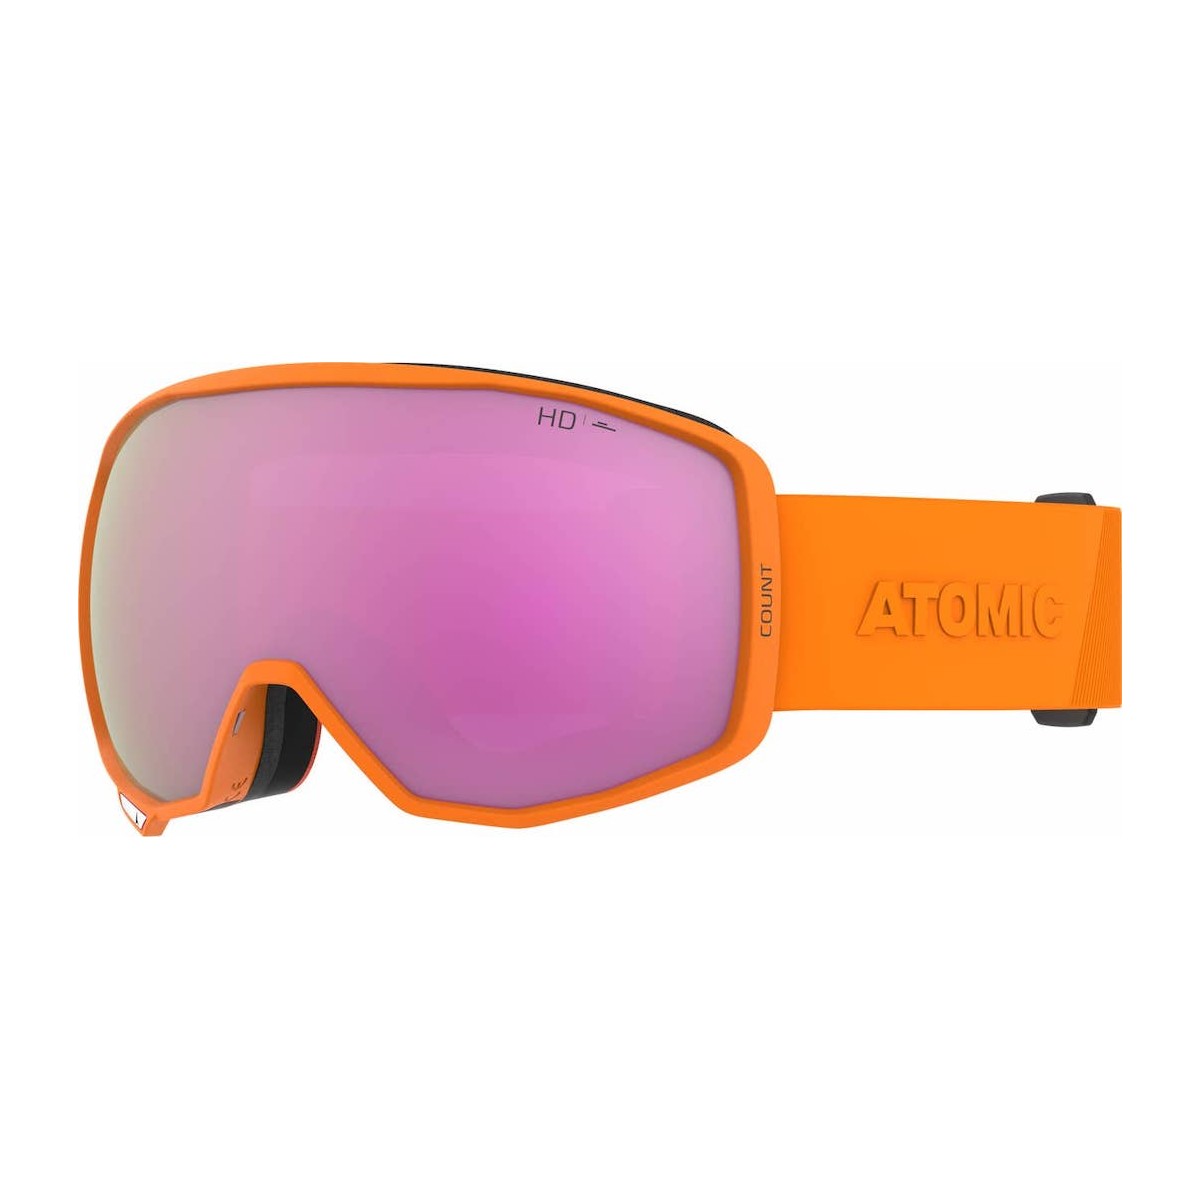 ATOMIC COUNT HD W/PINK COPPER HD C2-3 goggles - orange